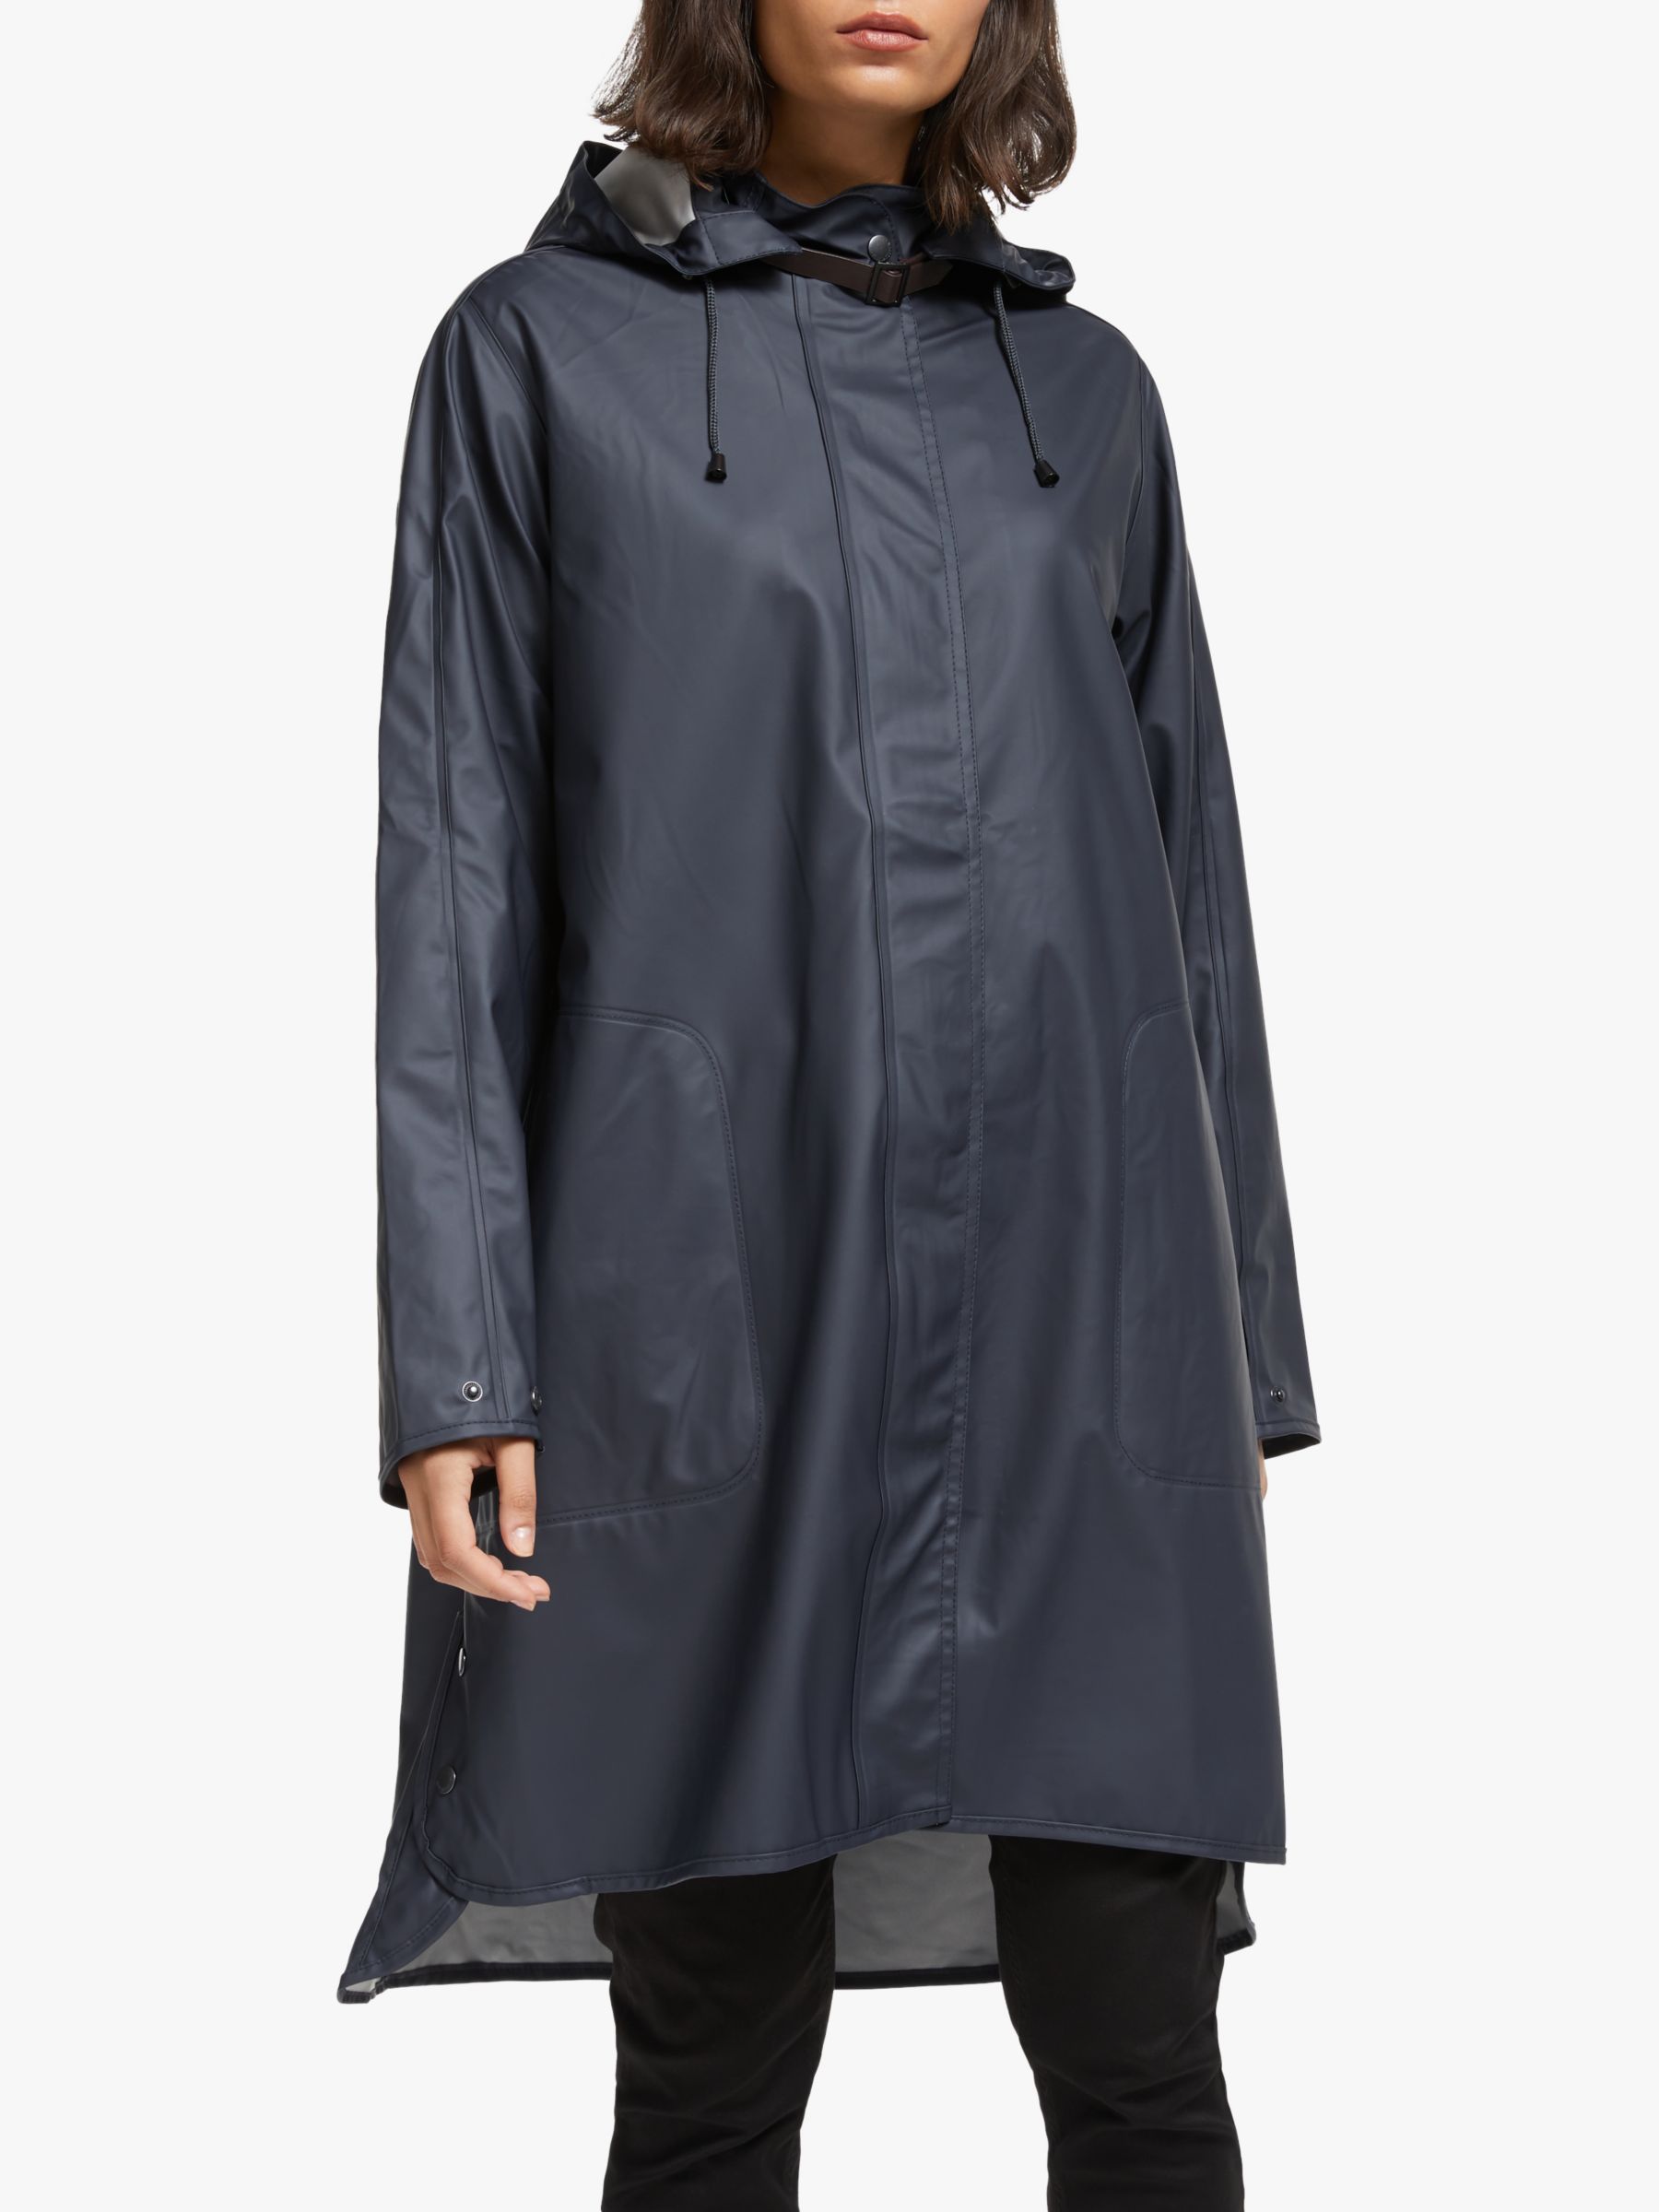 Ilse Jacobsen Hornbæk A-Line Raincoat, Dark Indigo at John Lewis & Partners